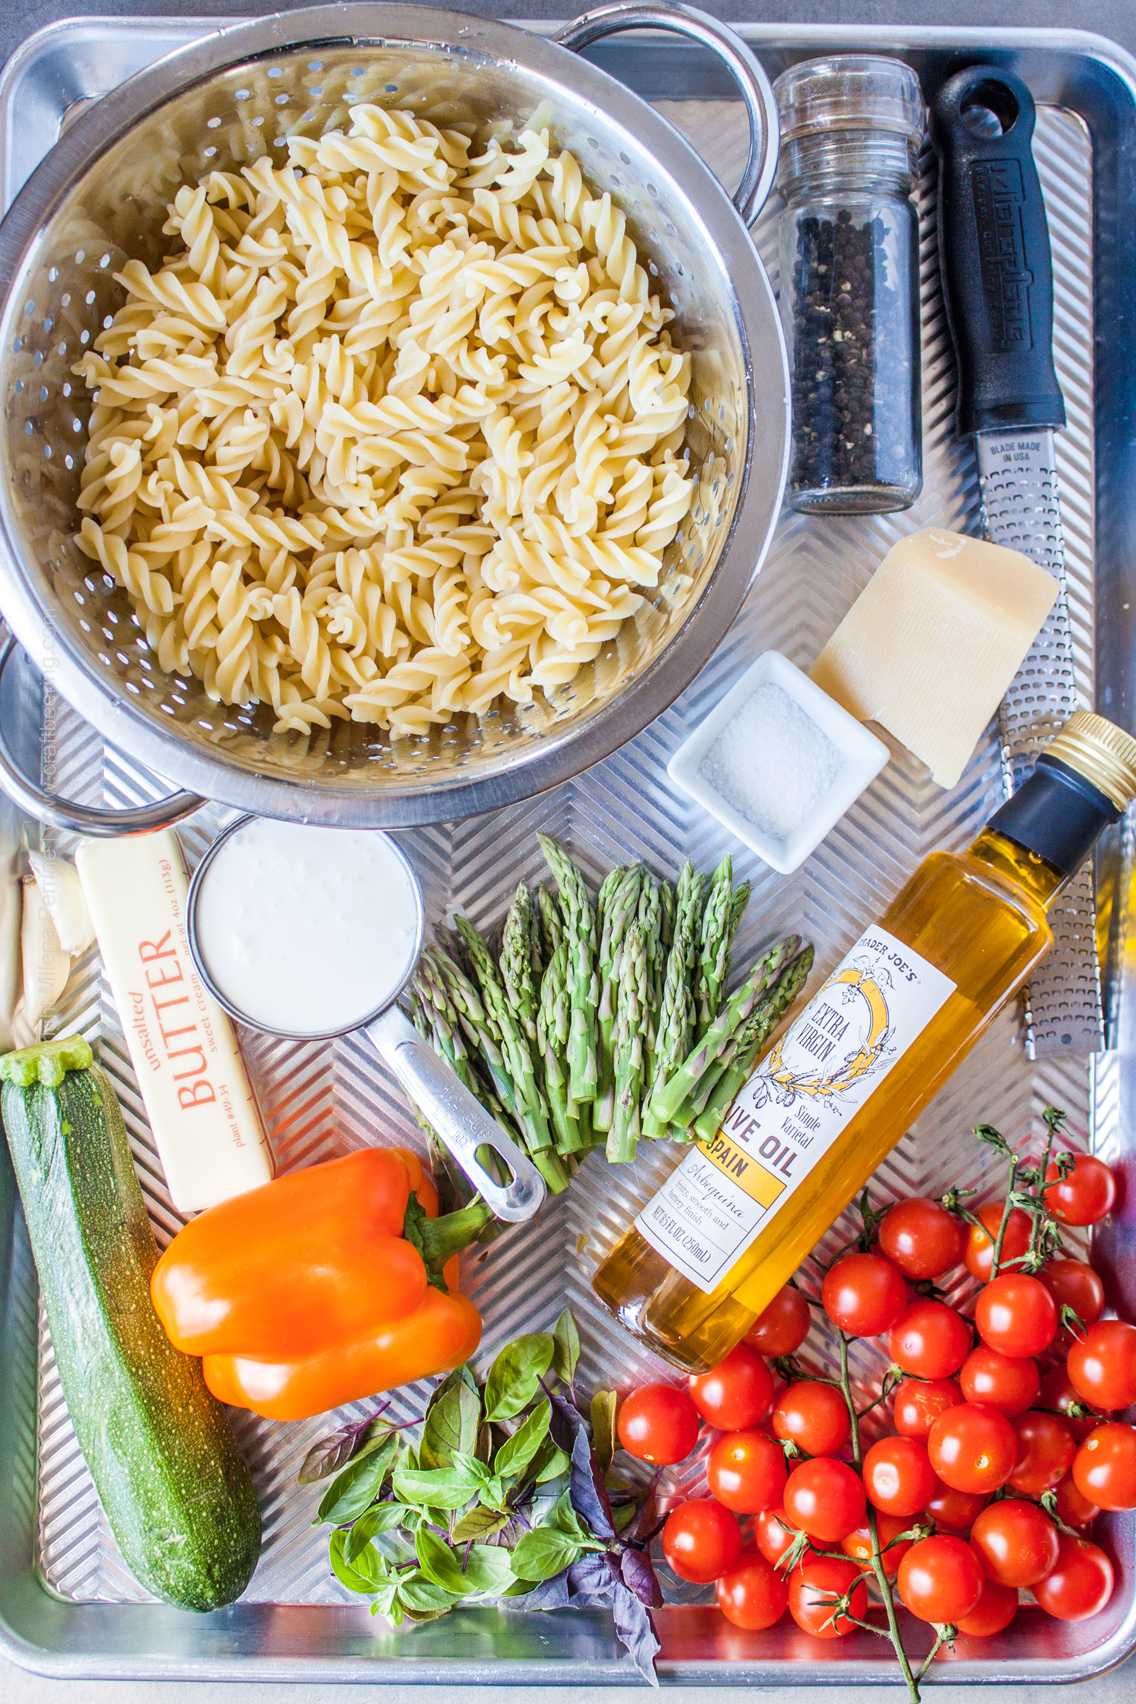 Raw ingredients for pasta primavera - spiral short cut noodles, veggies, cream, parmesan, butter